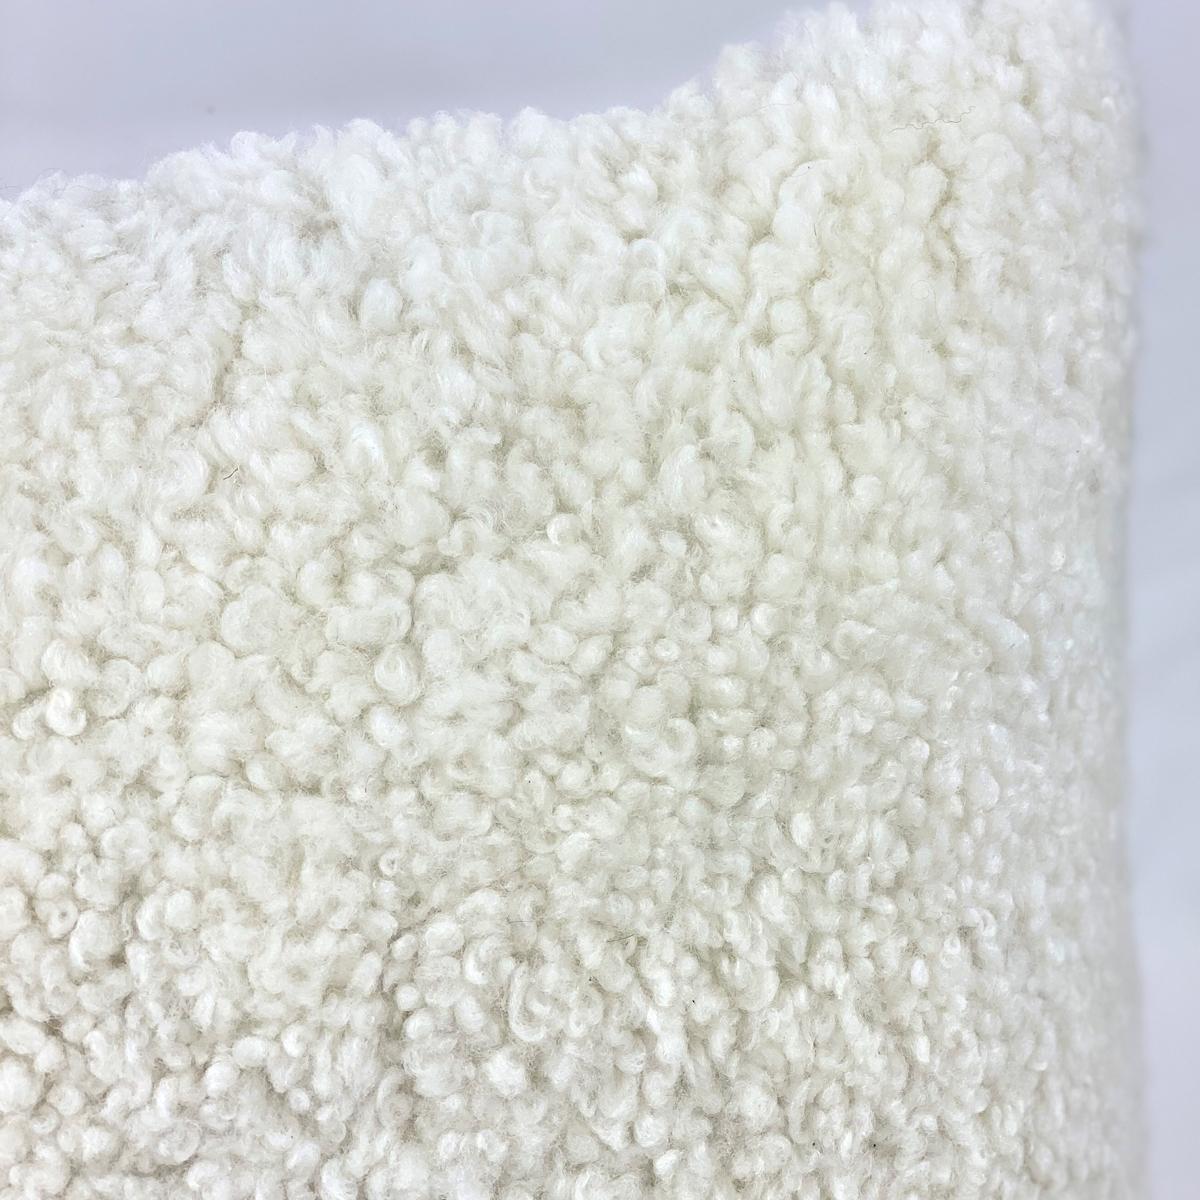 Shearling-Kissen, weißes Schafsfell, quadratisch, 18x18 Zoll  40 x 40 cm  (Australisch) im Angebot